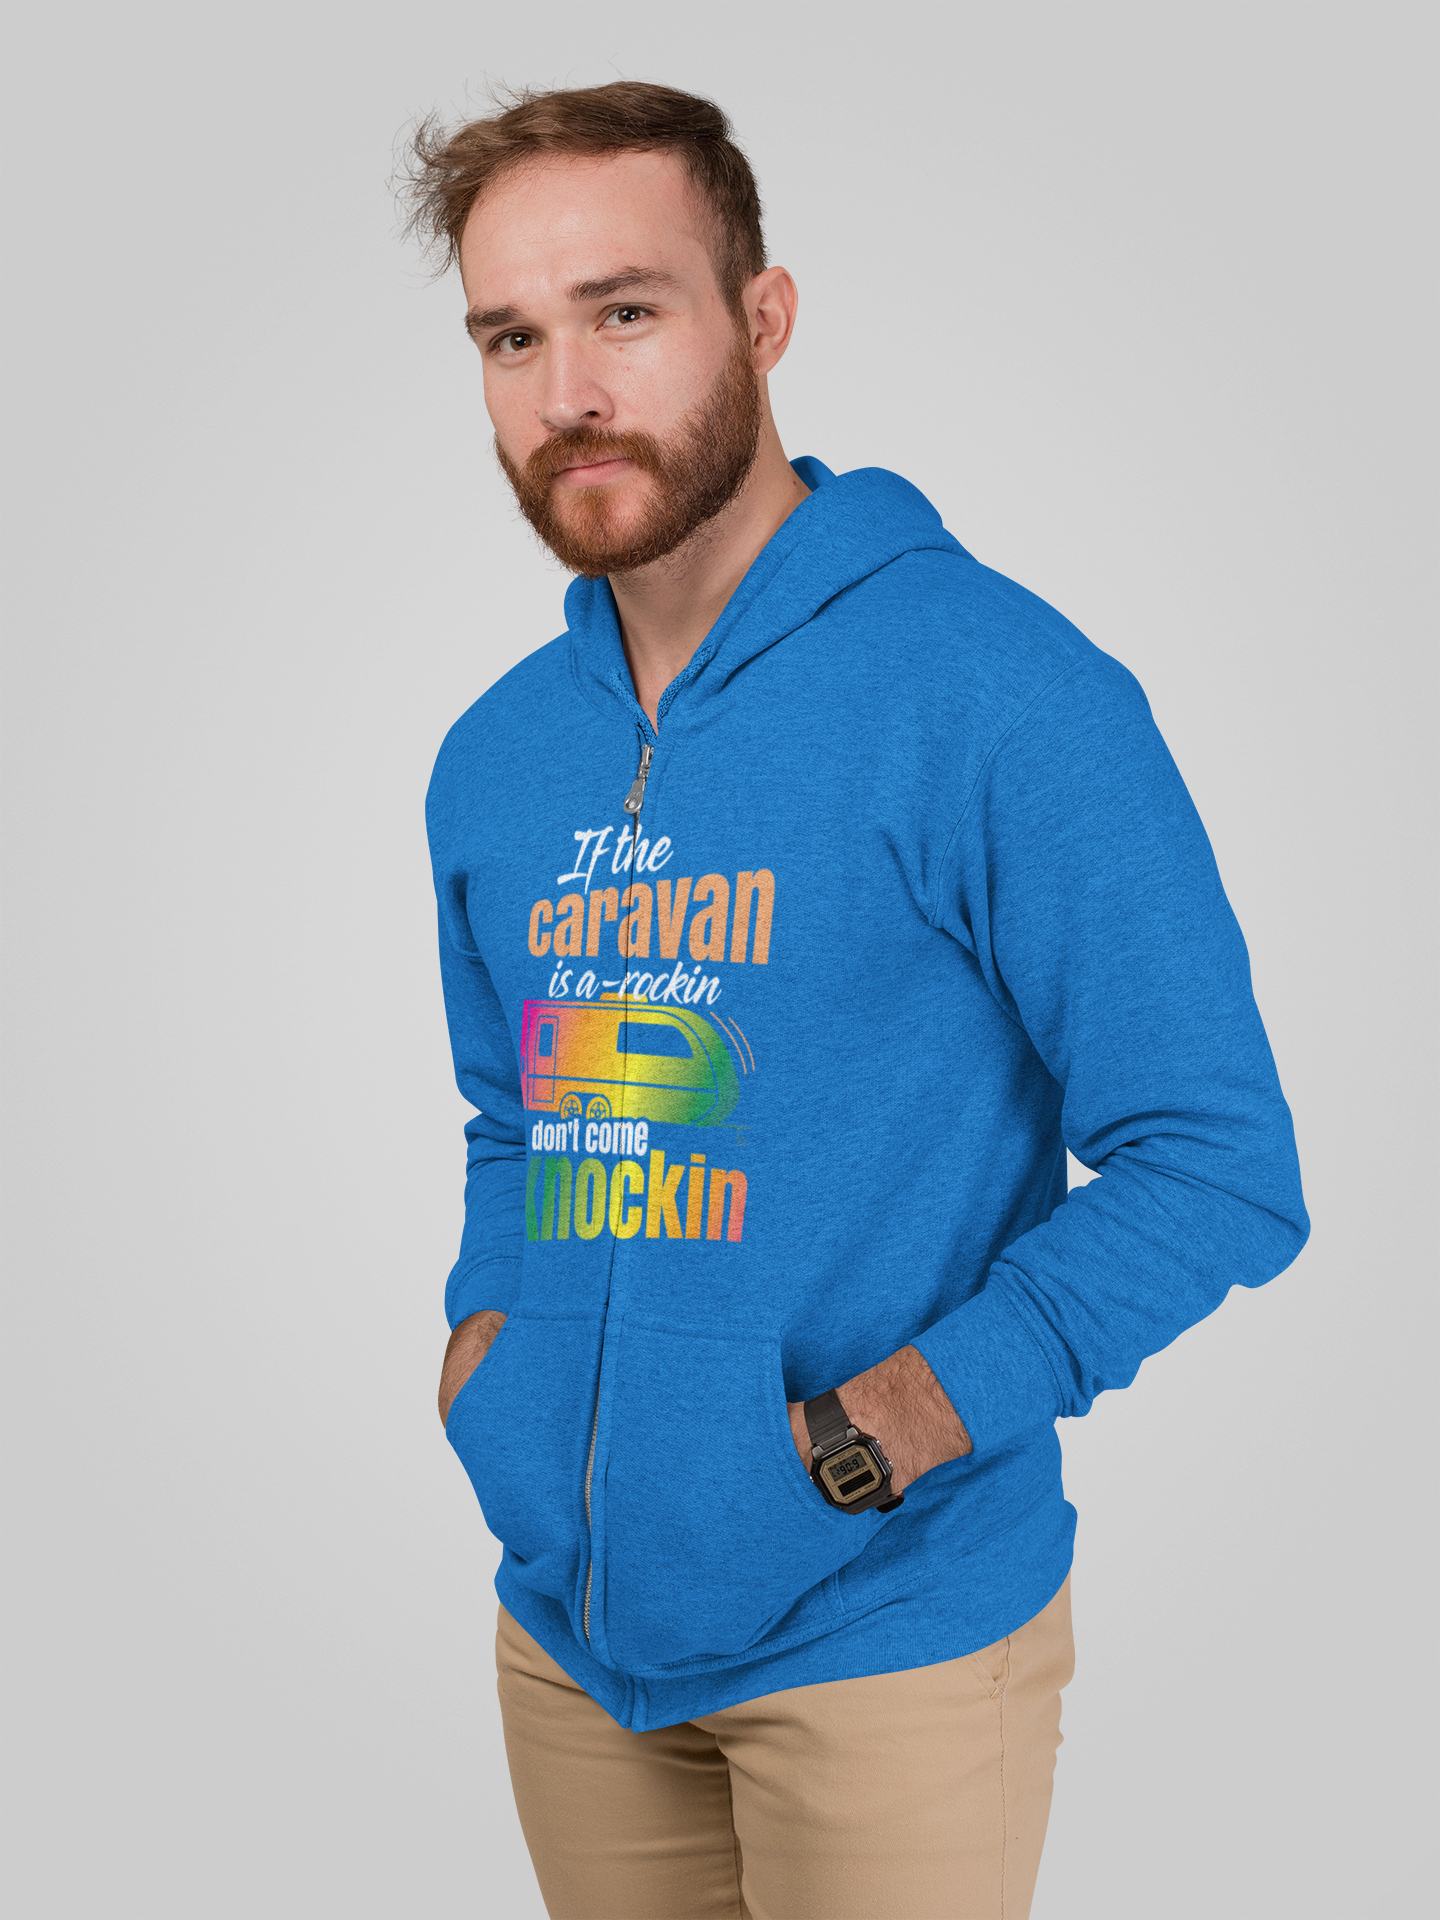 caravan rockin, don't knock; Full-zip hoodie sweatshirt